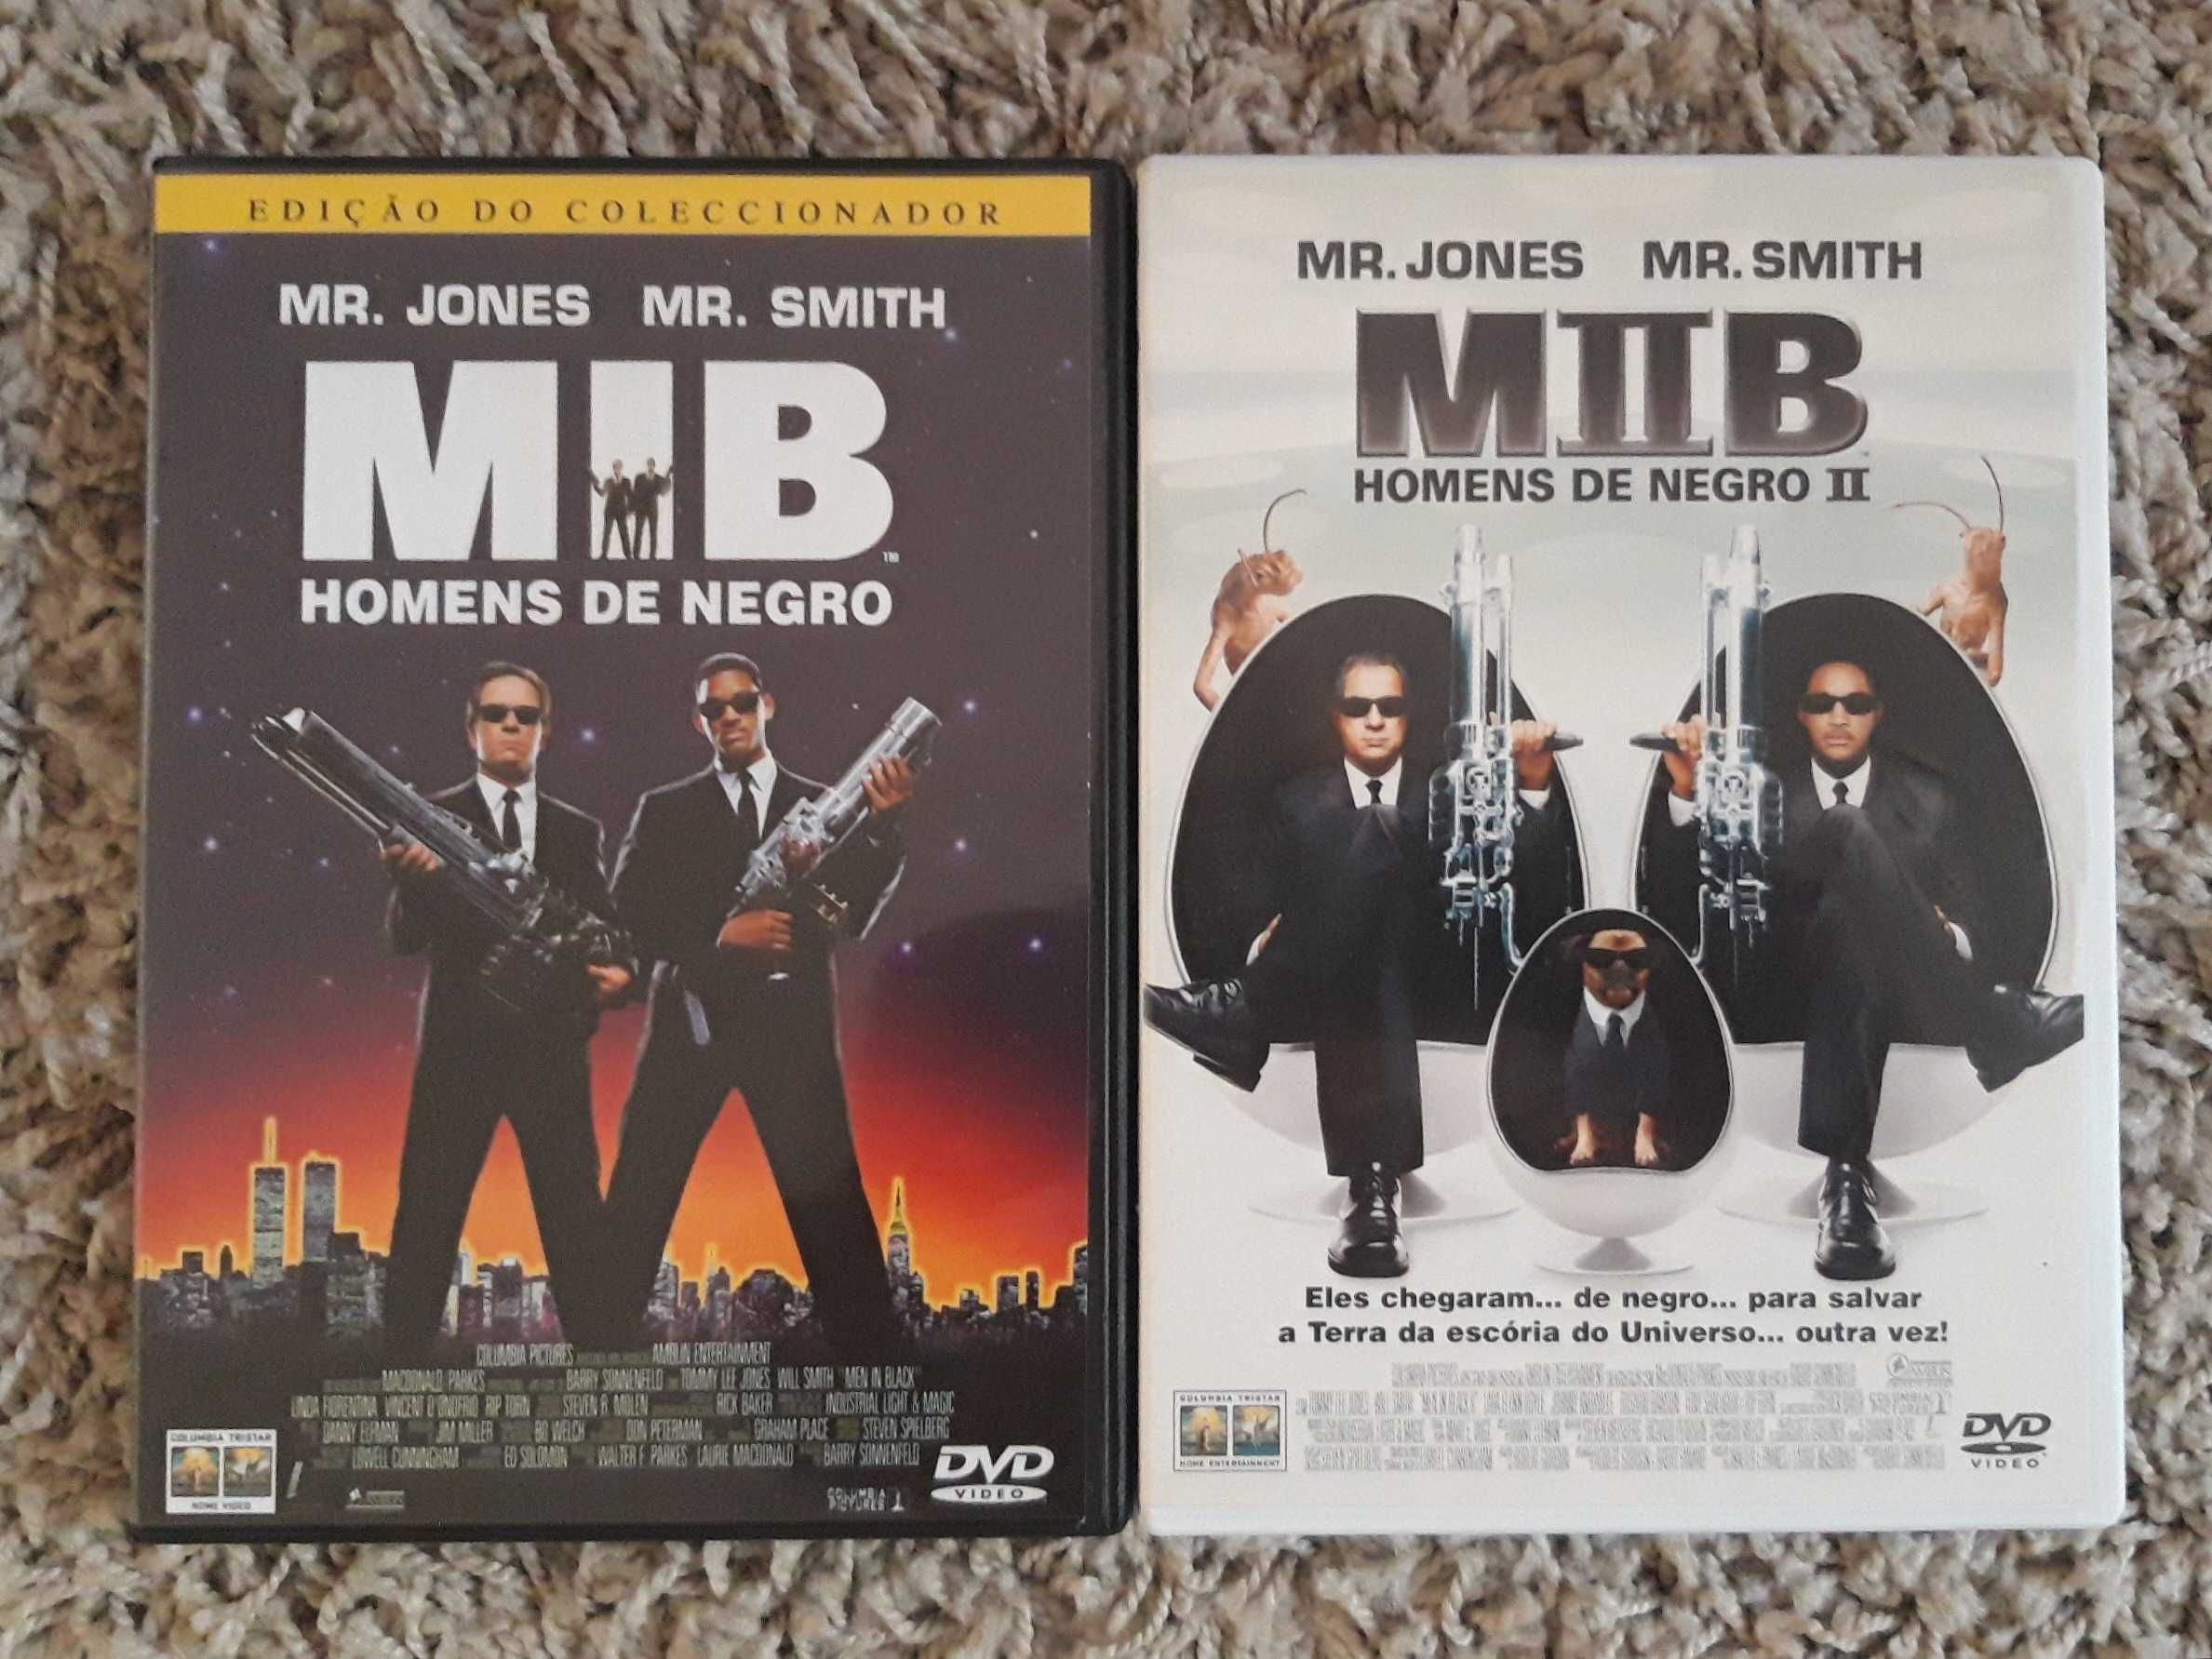 MIB - Men in Black (DVD I e II)